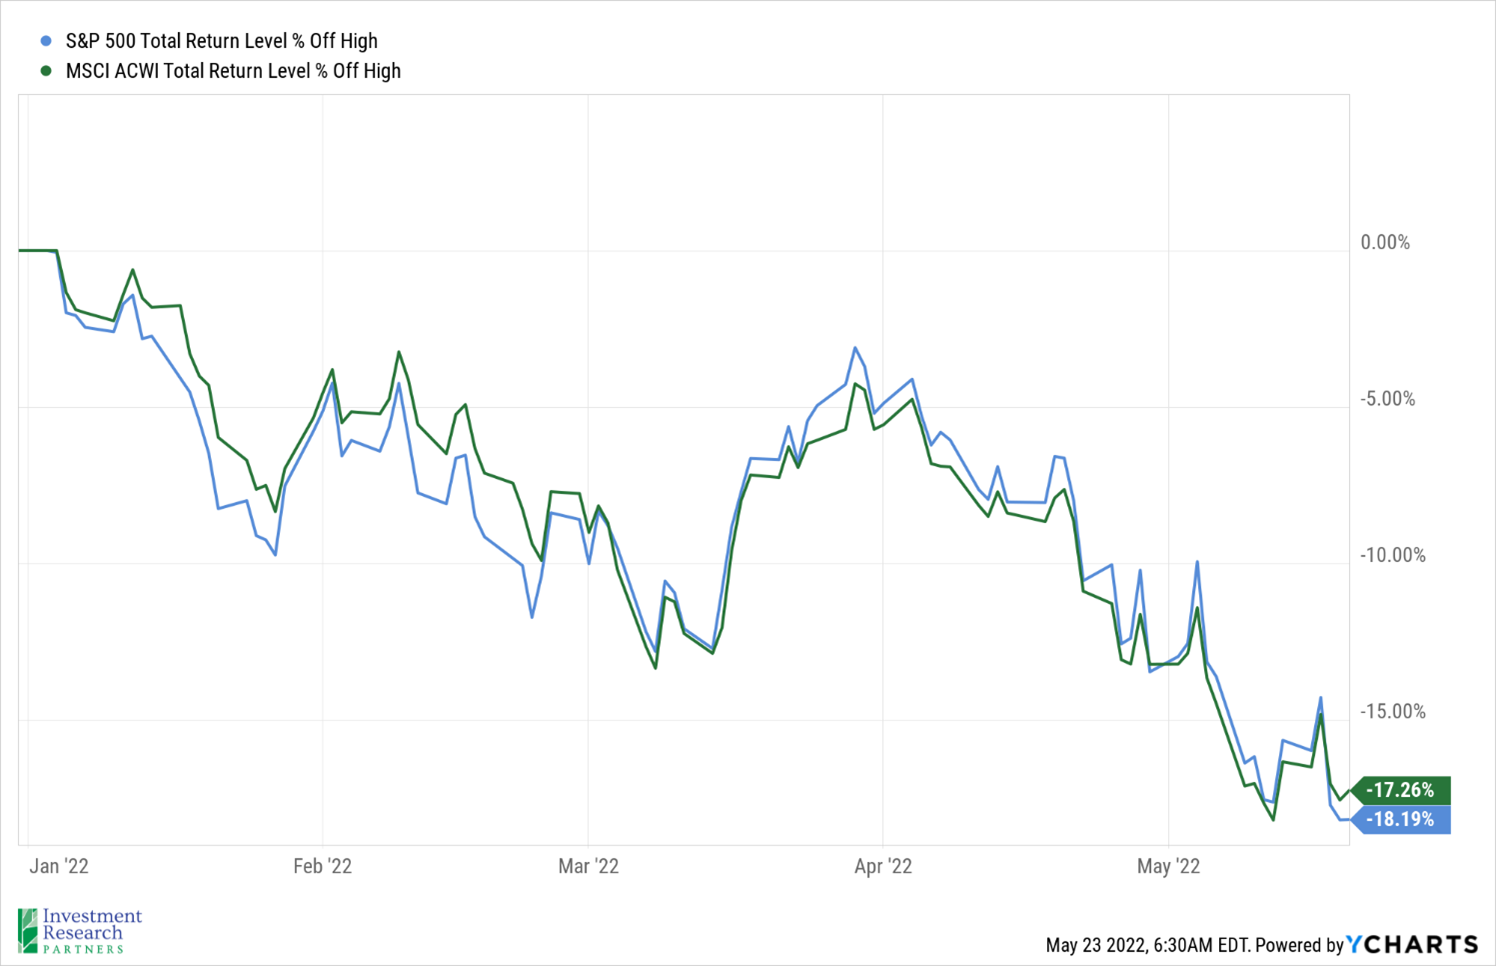 Line graphs depicting S&P 500 Total Return Level Percent off High